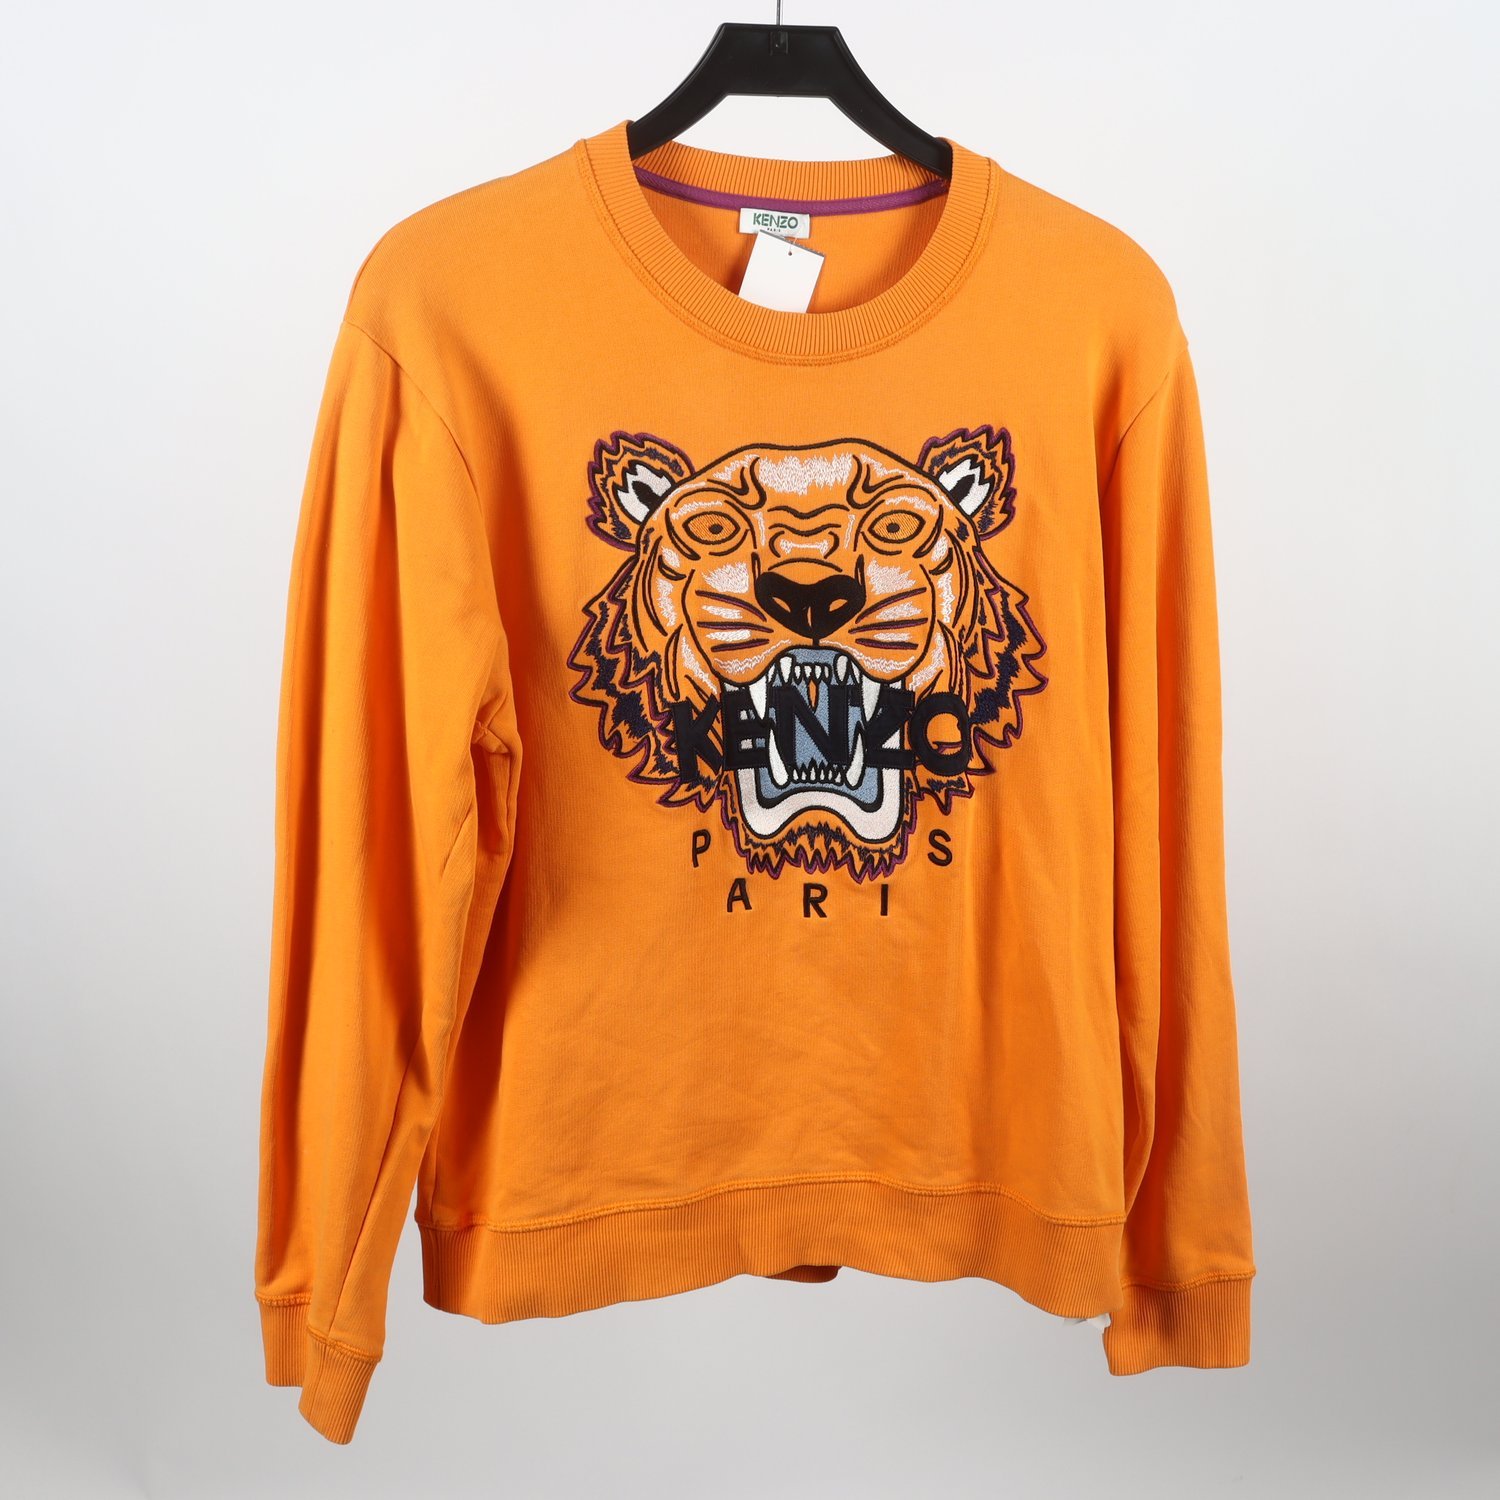 Sweatshirt, Kenzo, orange, stl. L